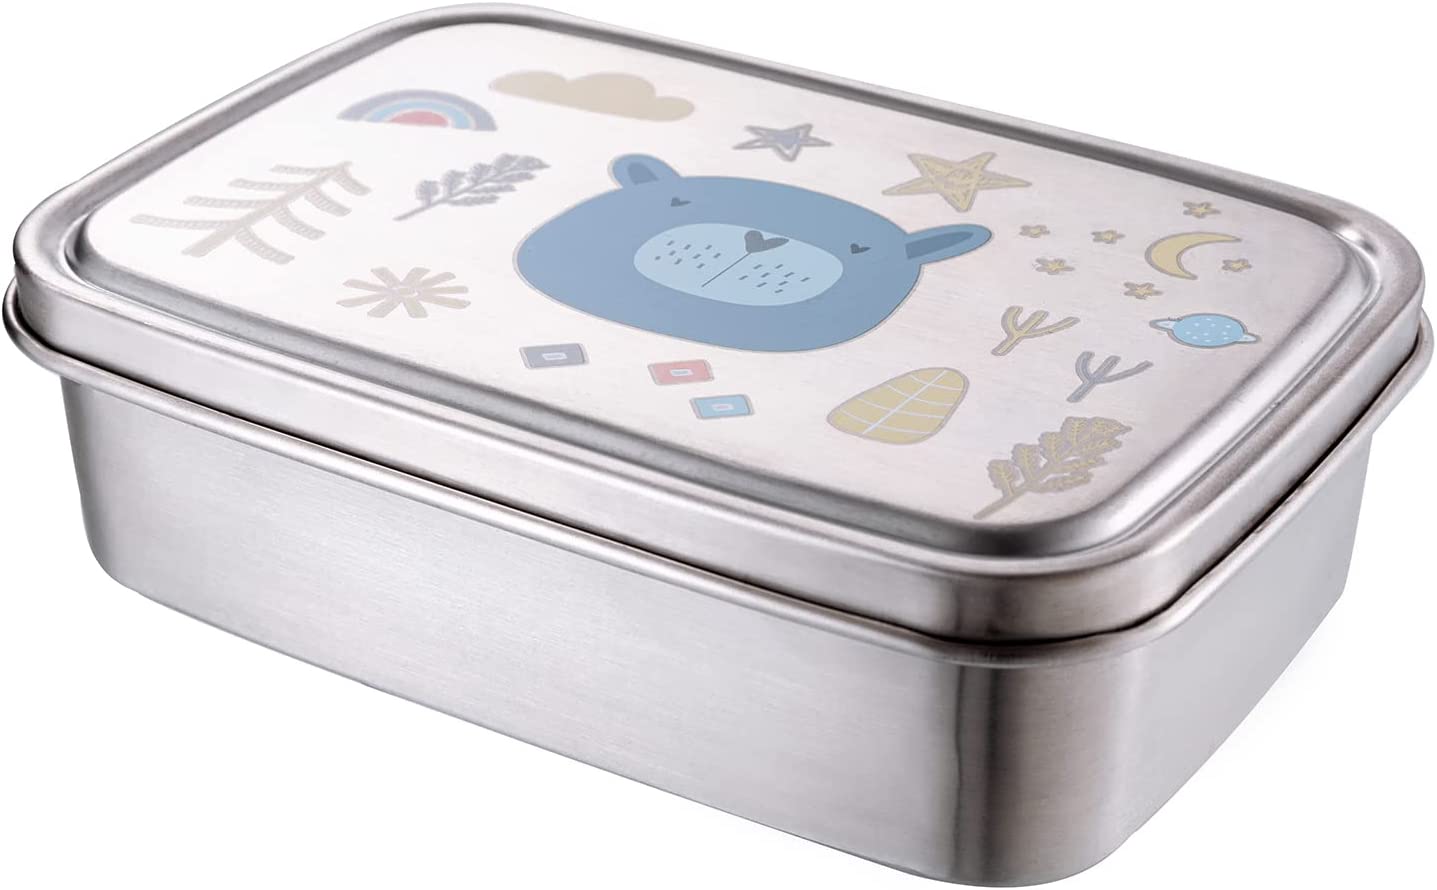 Stainless Steel Lunch Box & Drinking Cup - Kuru Store